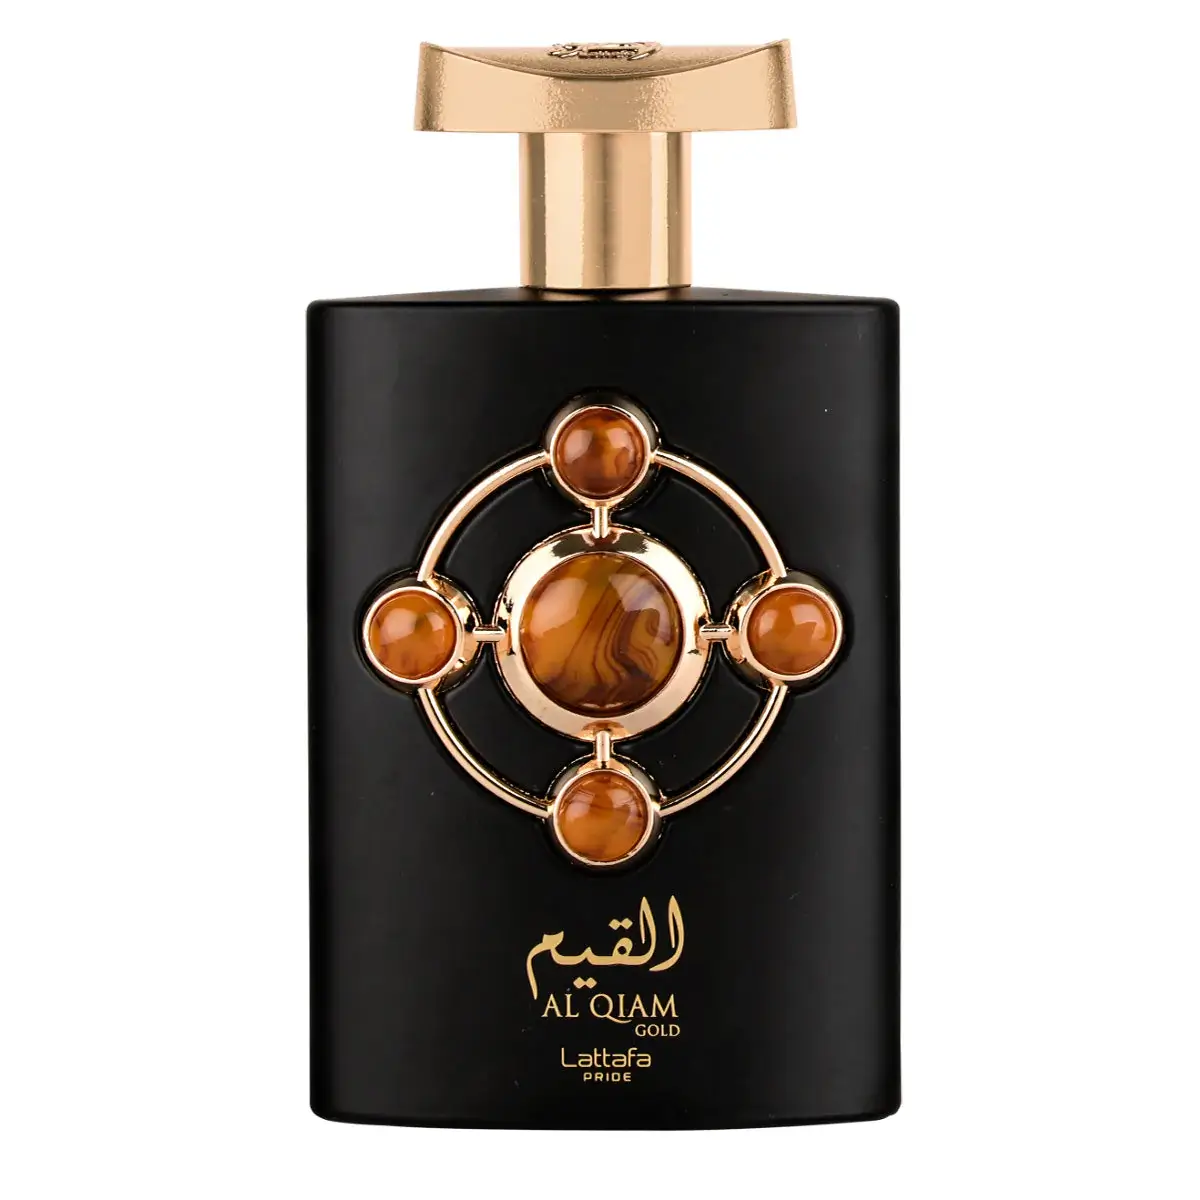 Al Qiam Gold Perfume / Eau De Parfum 100Ml By Lattafa Pride 